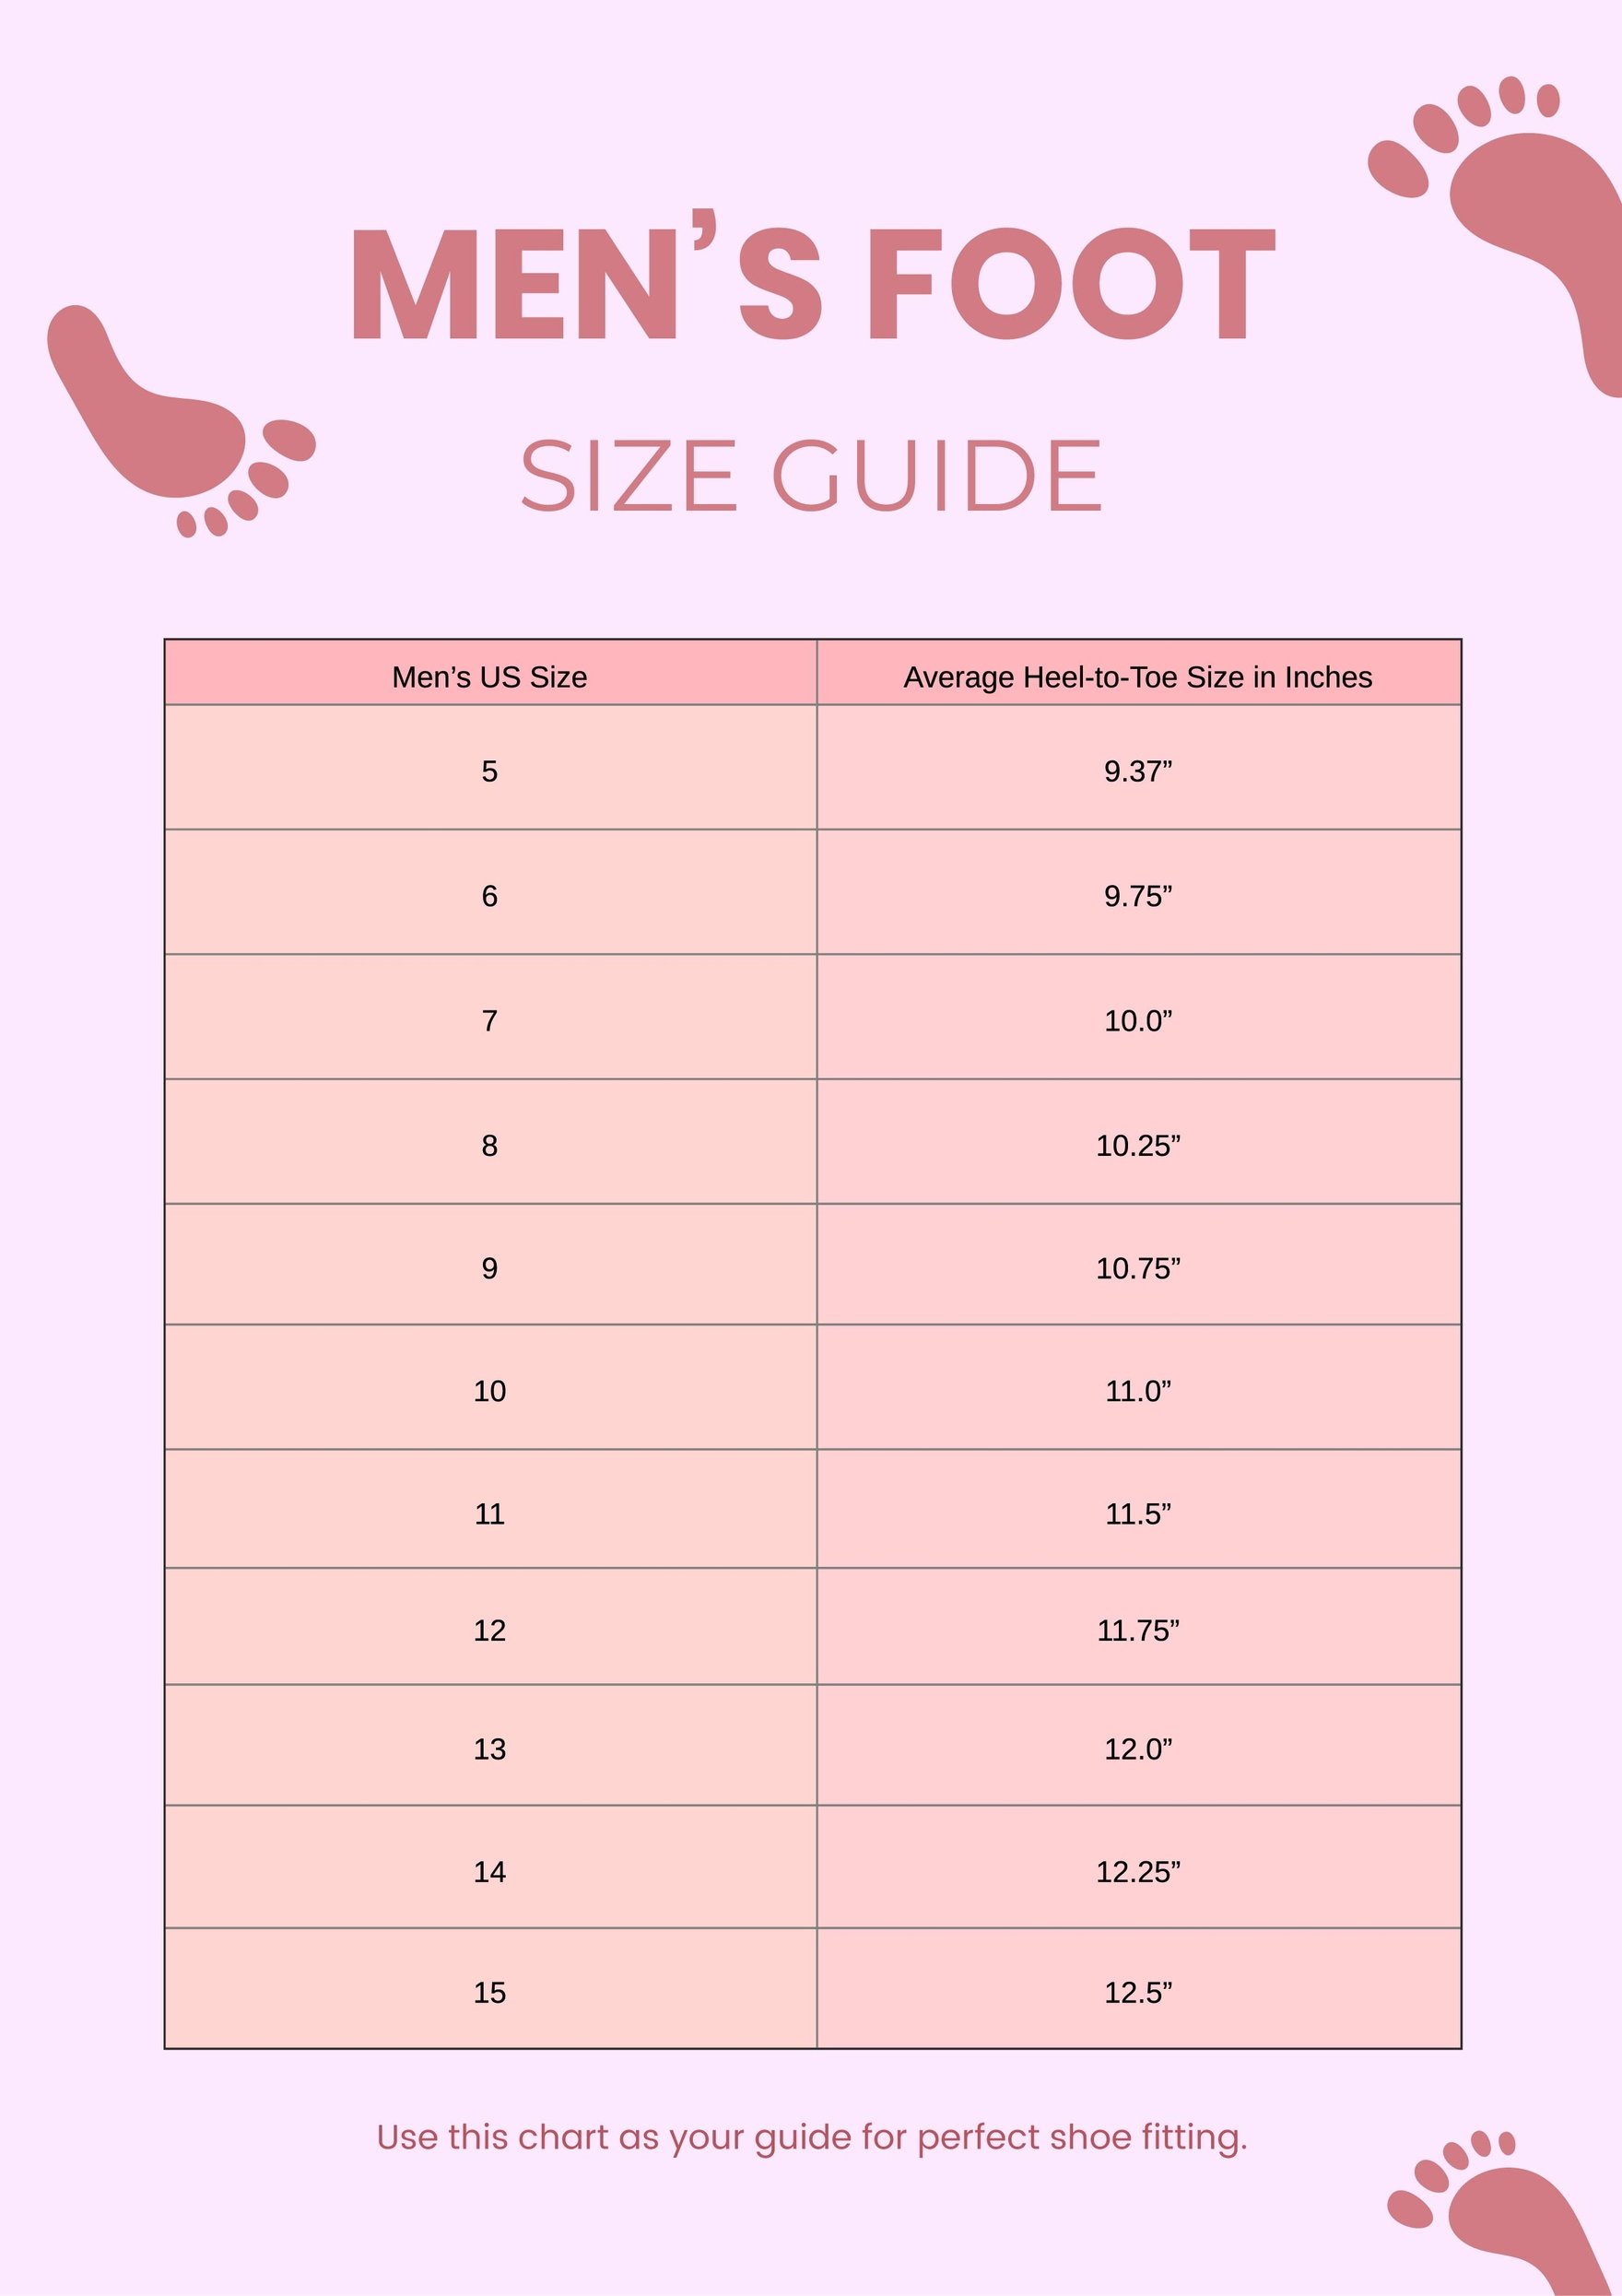 Free Men's Foot Size Chart - Download in PDF, Illustrator